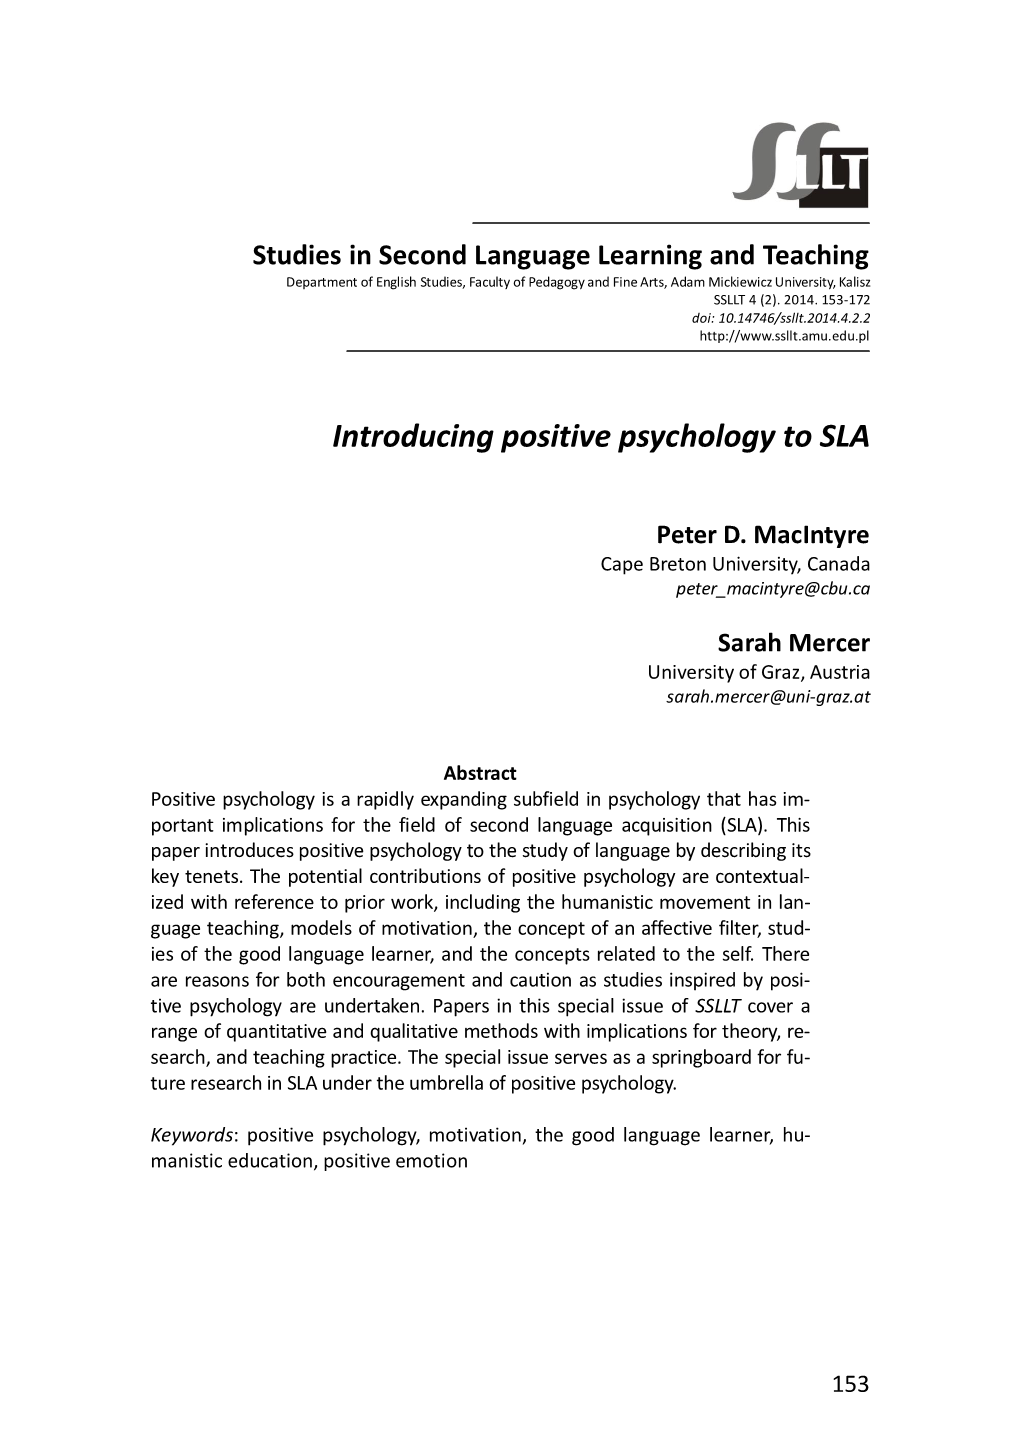 Introducing Positive Psychology to SLA